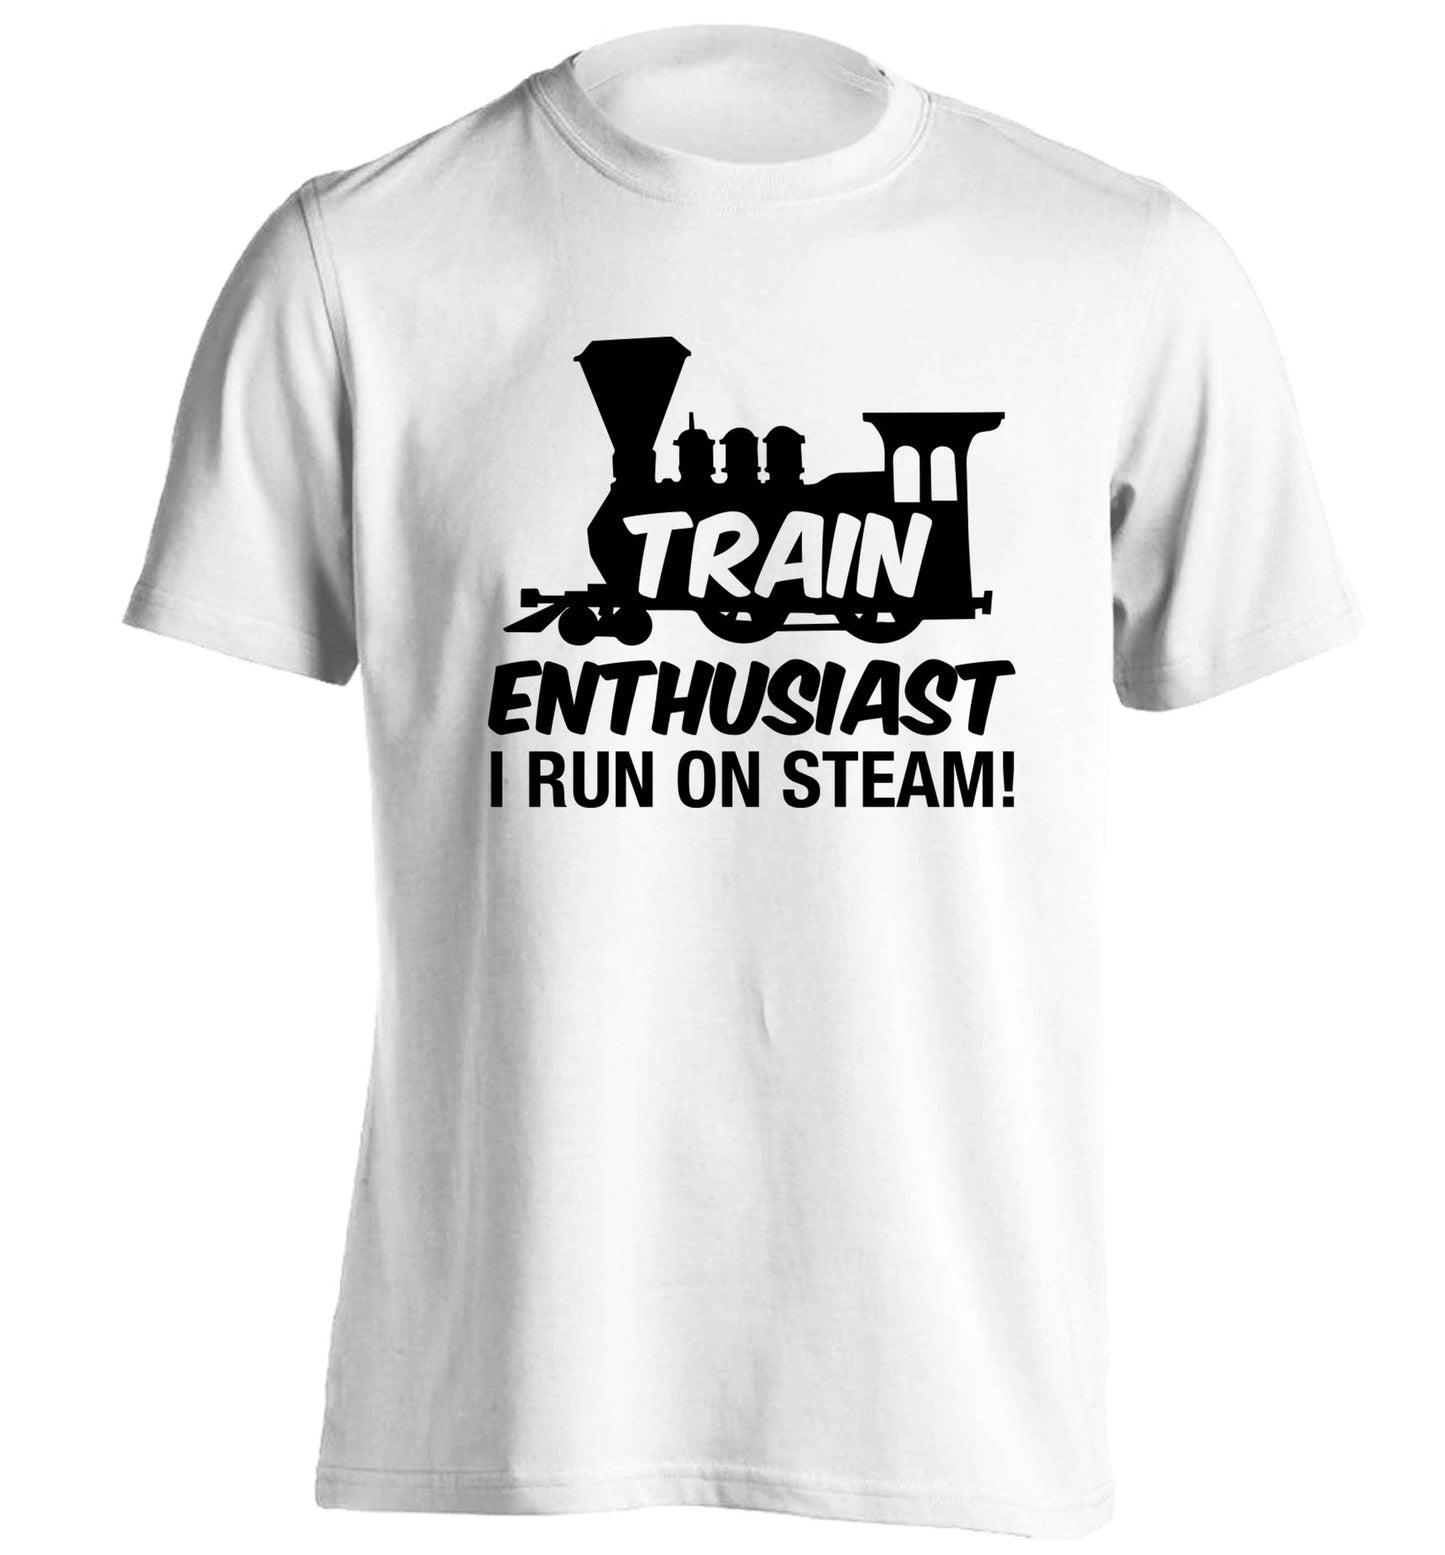 Train enthusiast I run on steam adults unisex white Tshirt 2XL